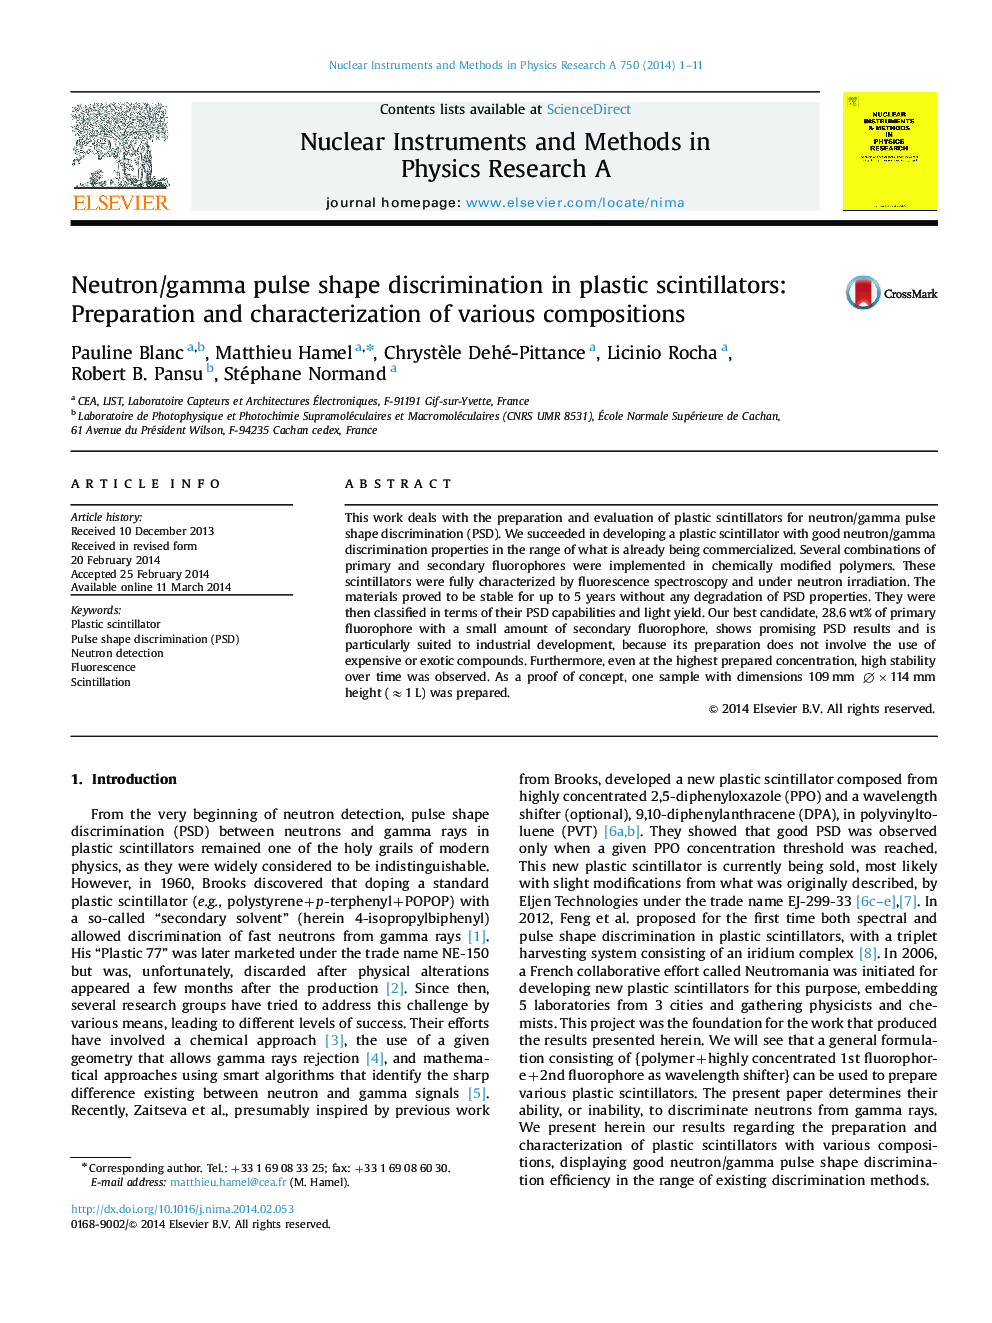 Neutron/gamma pulse shape discrimination in plastic scintillators: Preparation and characterization of various compositions